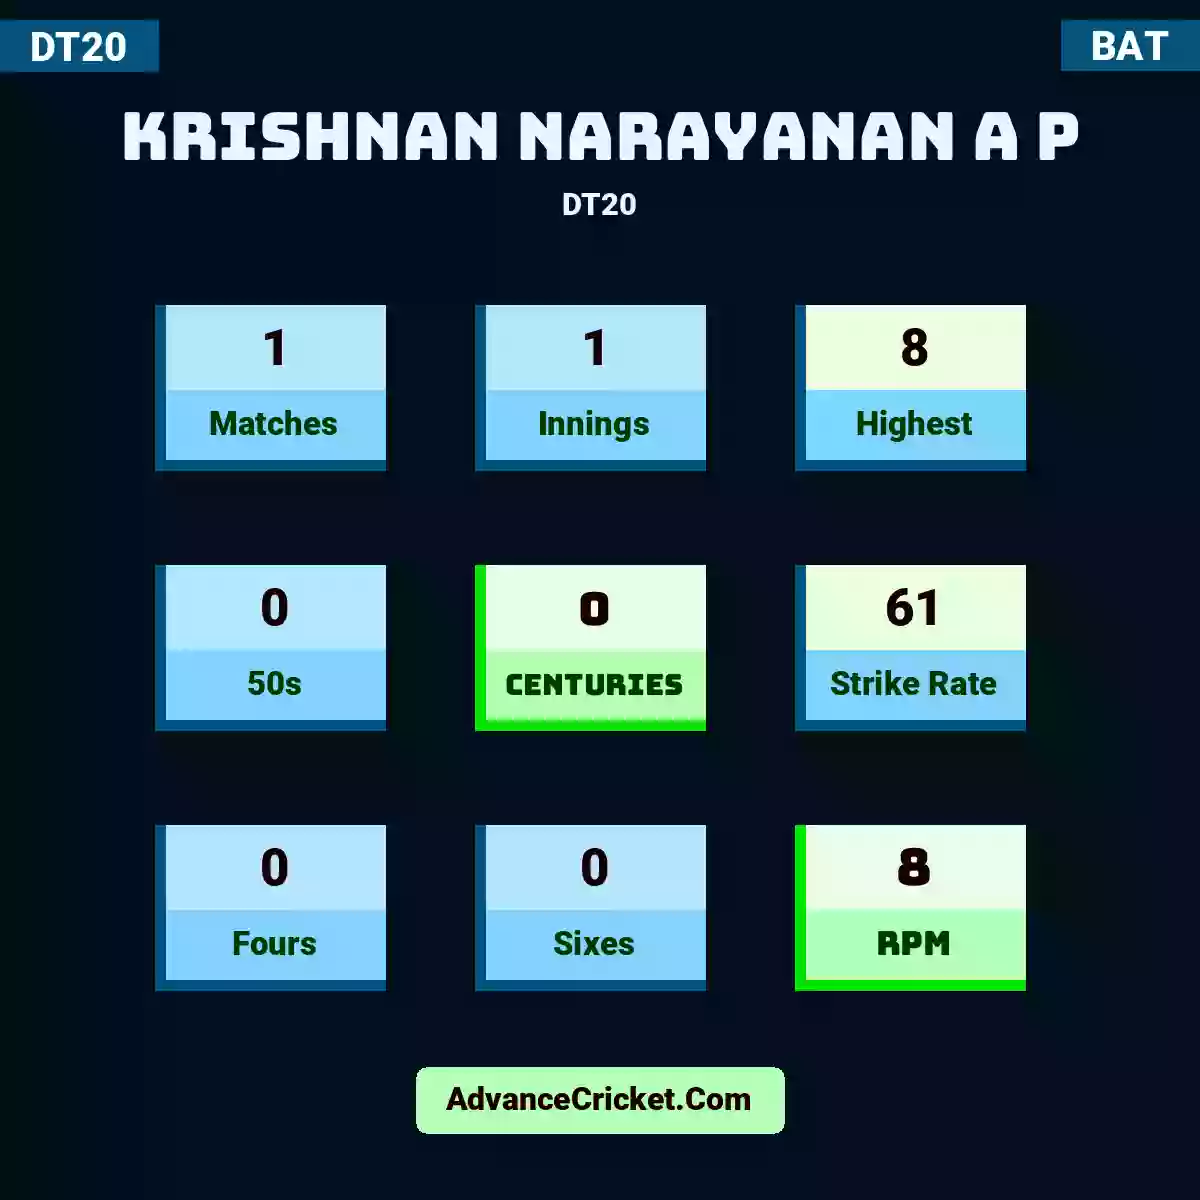 Krishnan Narayanan A P DT20 , Krishnan Narayanan A P played 1 matches, scored 8 runs as highest, 0 half-centuries, and 0 centuries, with a strike rate of 61. K.Narayanan.A.P hit 0 fours and 0 sixes, with an RPM of 8.